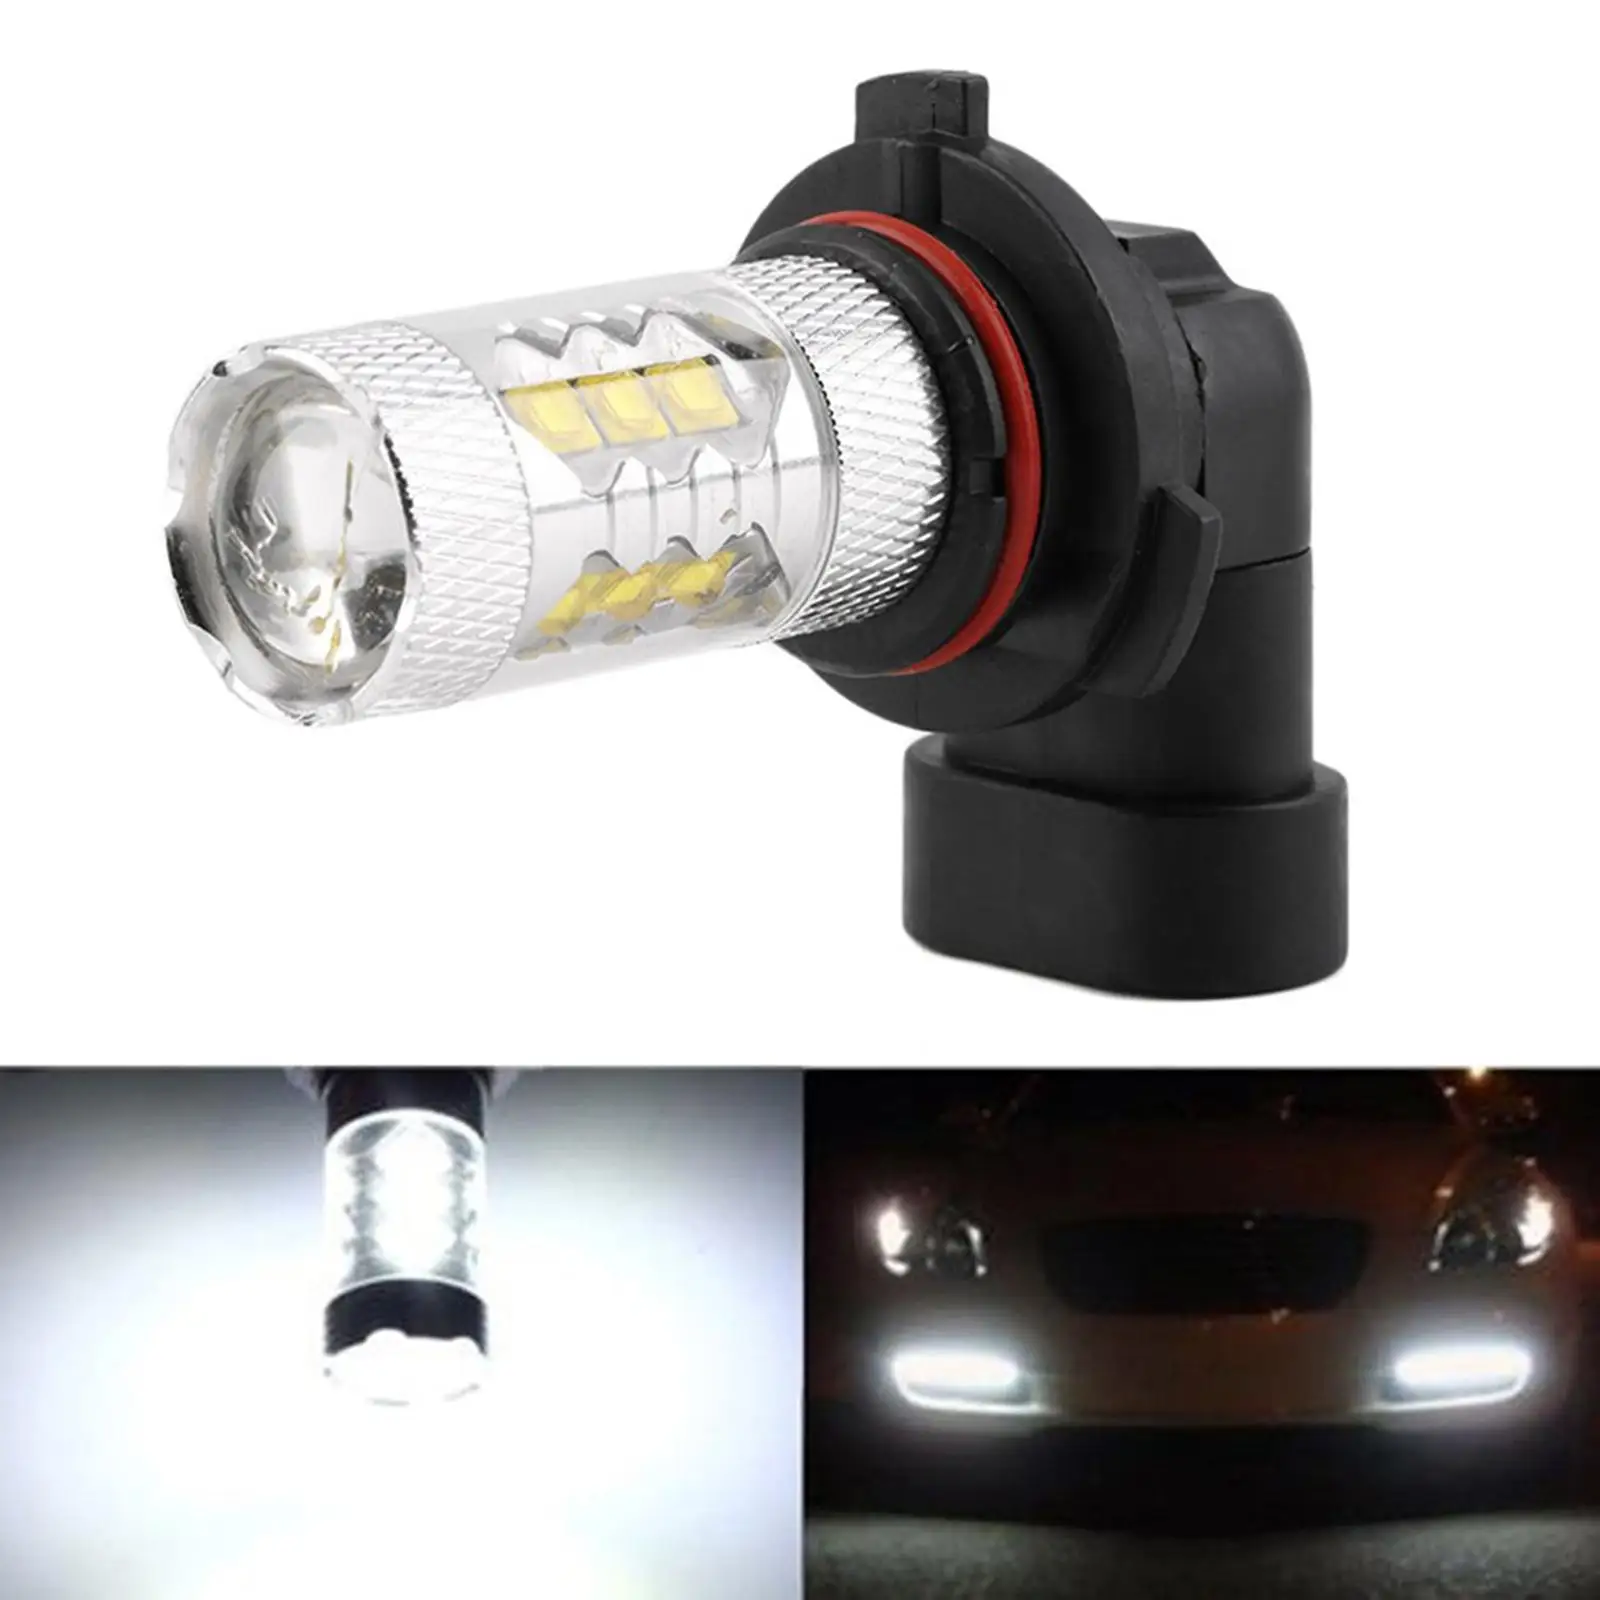 HB4 9006 Fog Lights 80W IP67 Waterproof Replacement Universal Driving Signal Bulbs Headlight Fog Lamps Bulbs for Car Truck